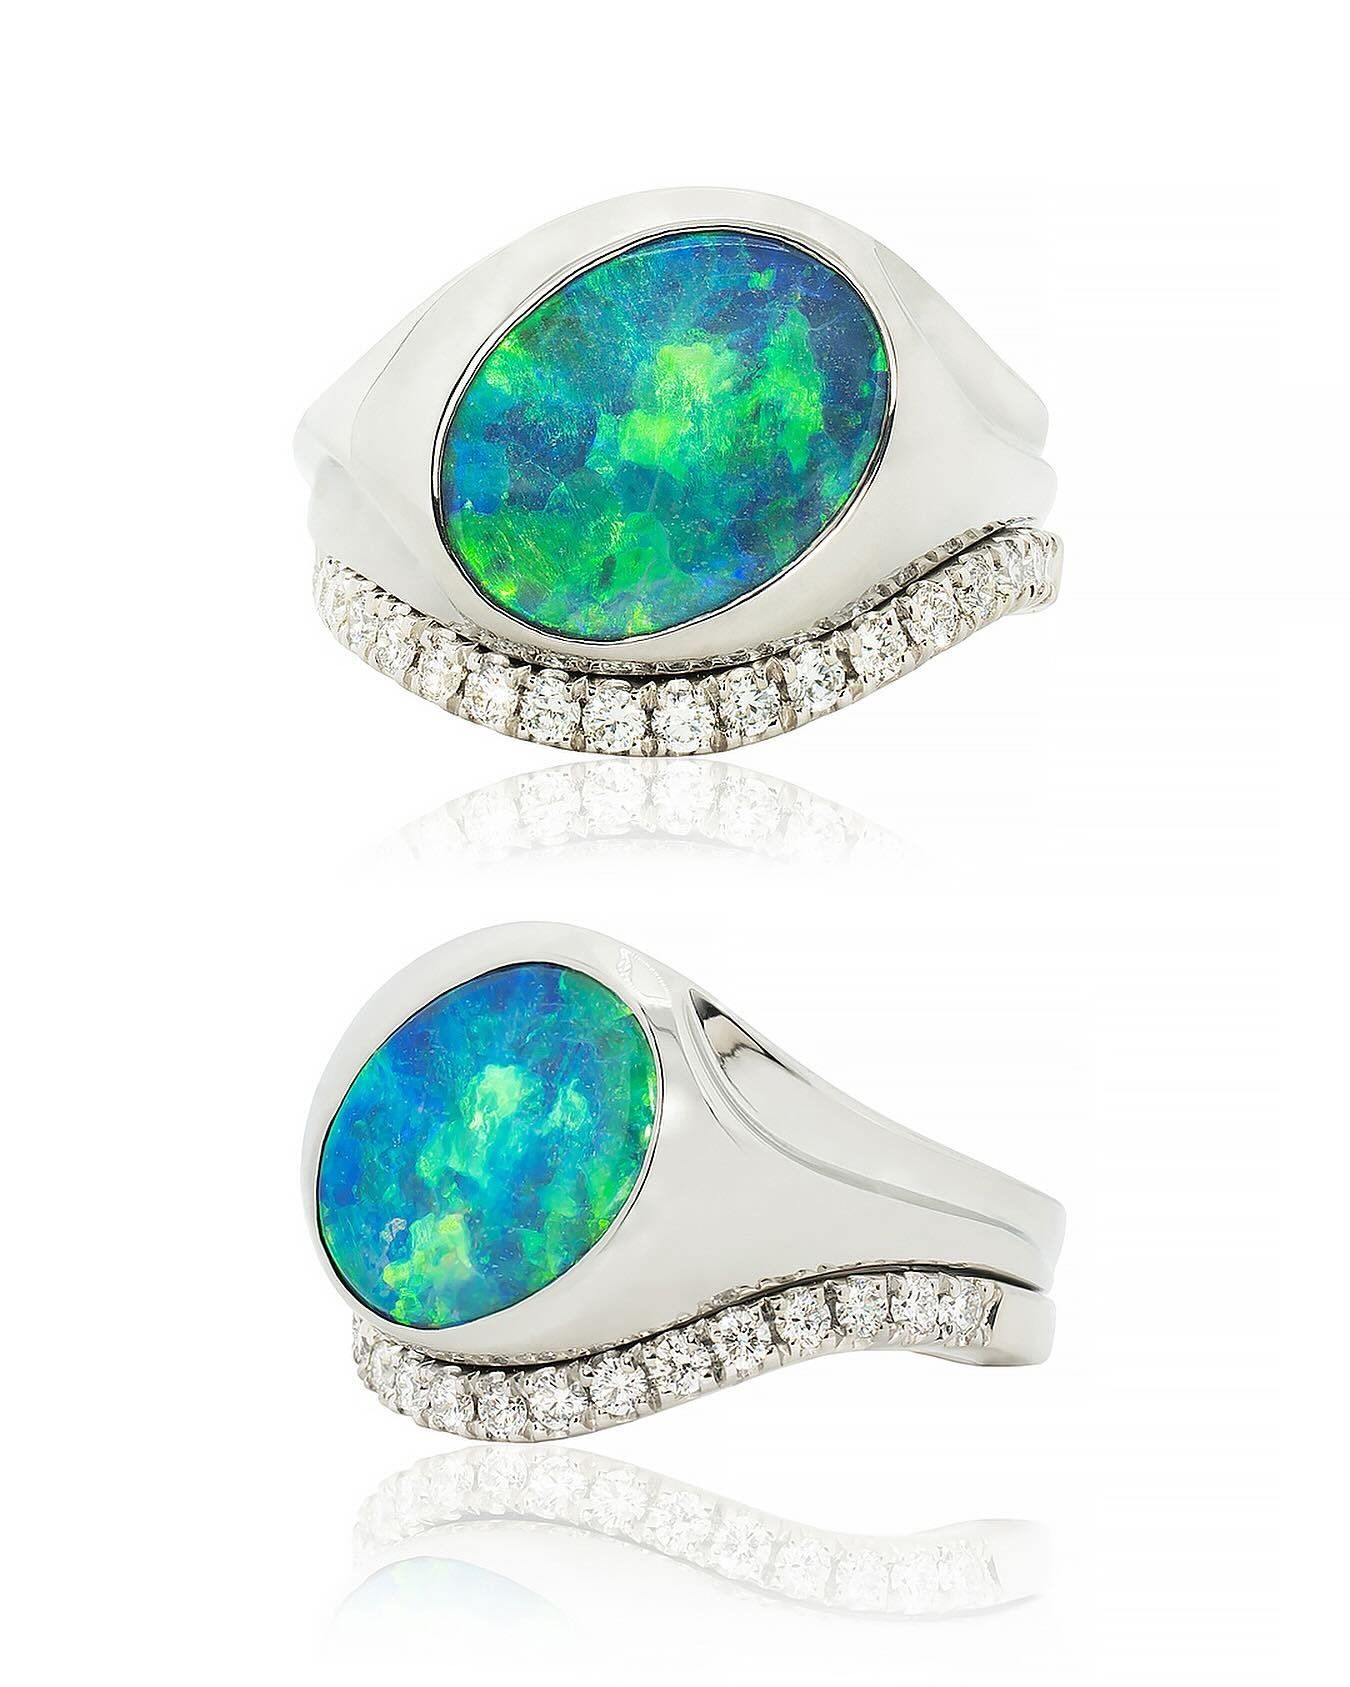 Opal &amp; Diamond Ring

Australian Opal: 3.56ct
Diamonds: .36ctw - VS1 - D/E
14kt White Gold
$7,000

Big Island Jewelers
Fine Jewelry - Made by Hand
#madeinhawaii